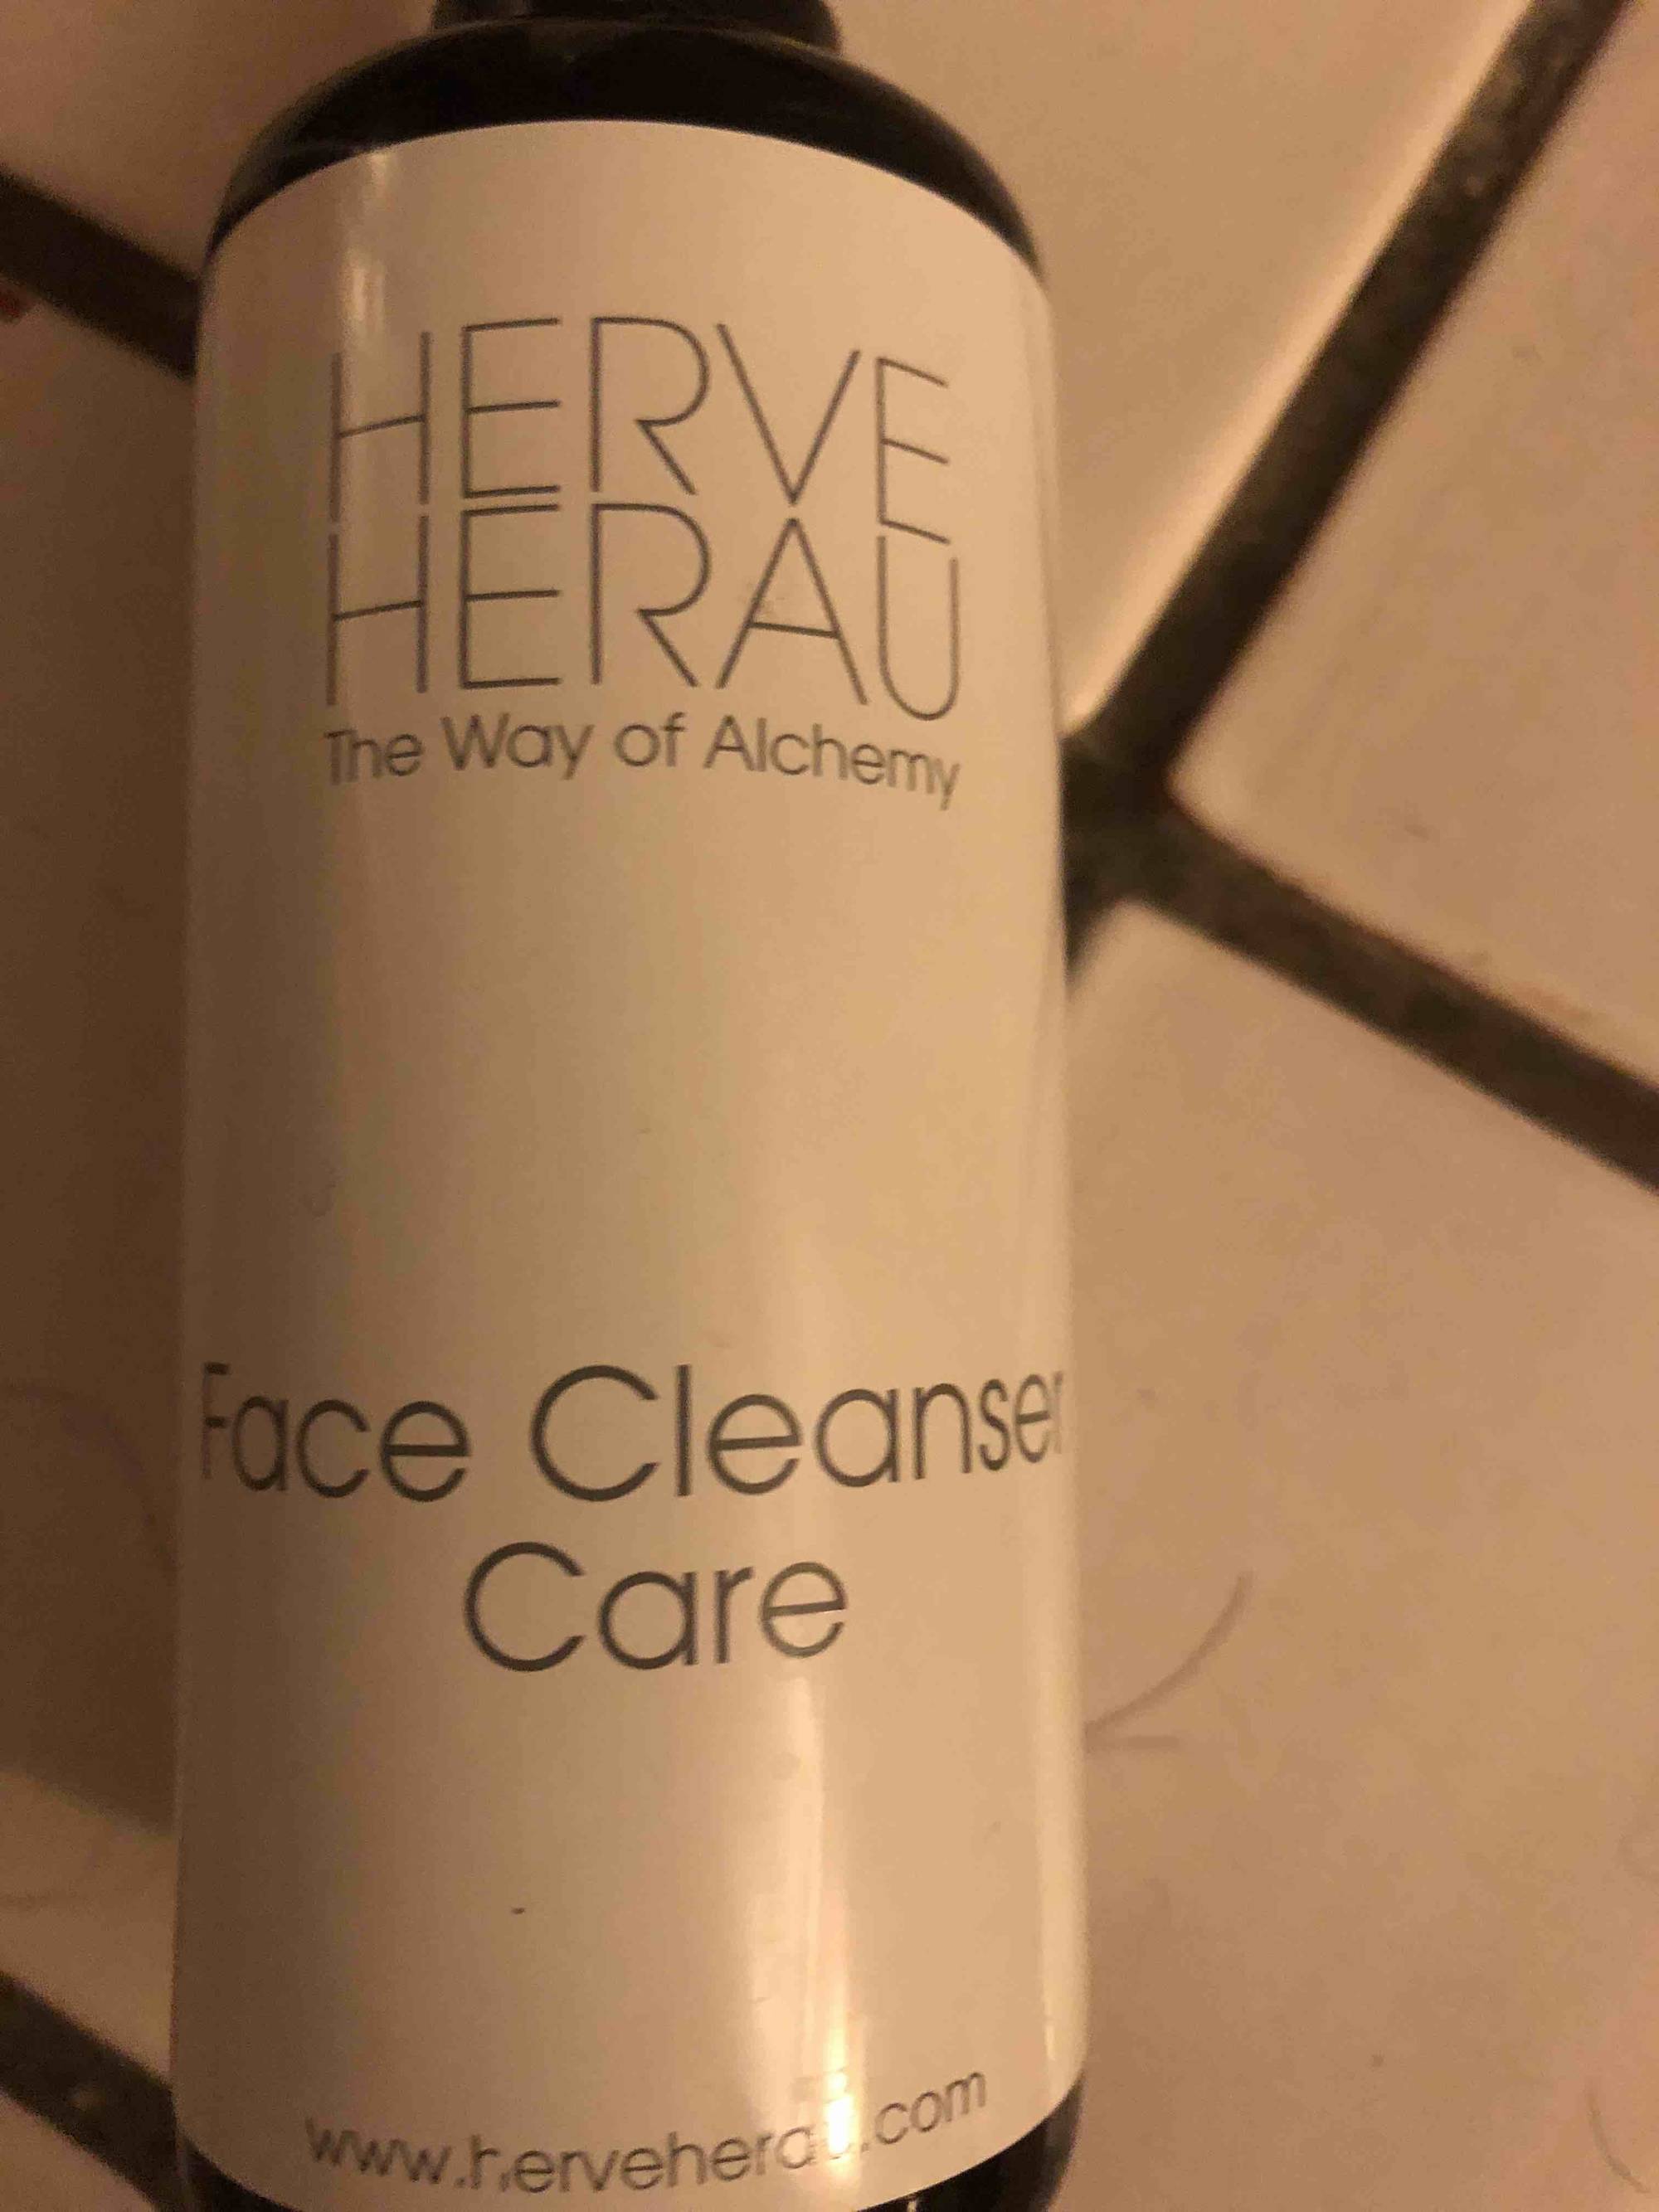 HERVÉ HERAU - The way of alchemy - Face cleanser care